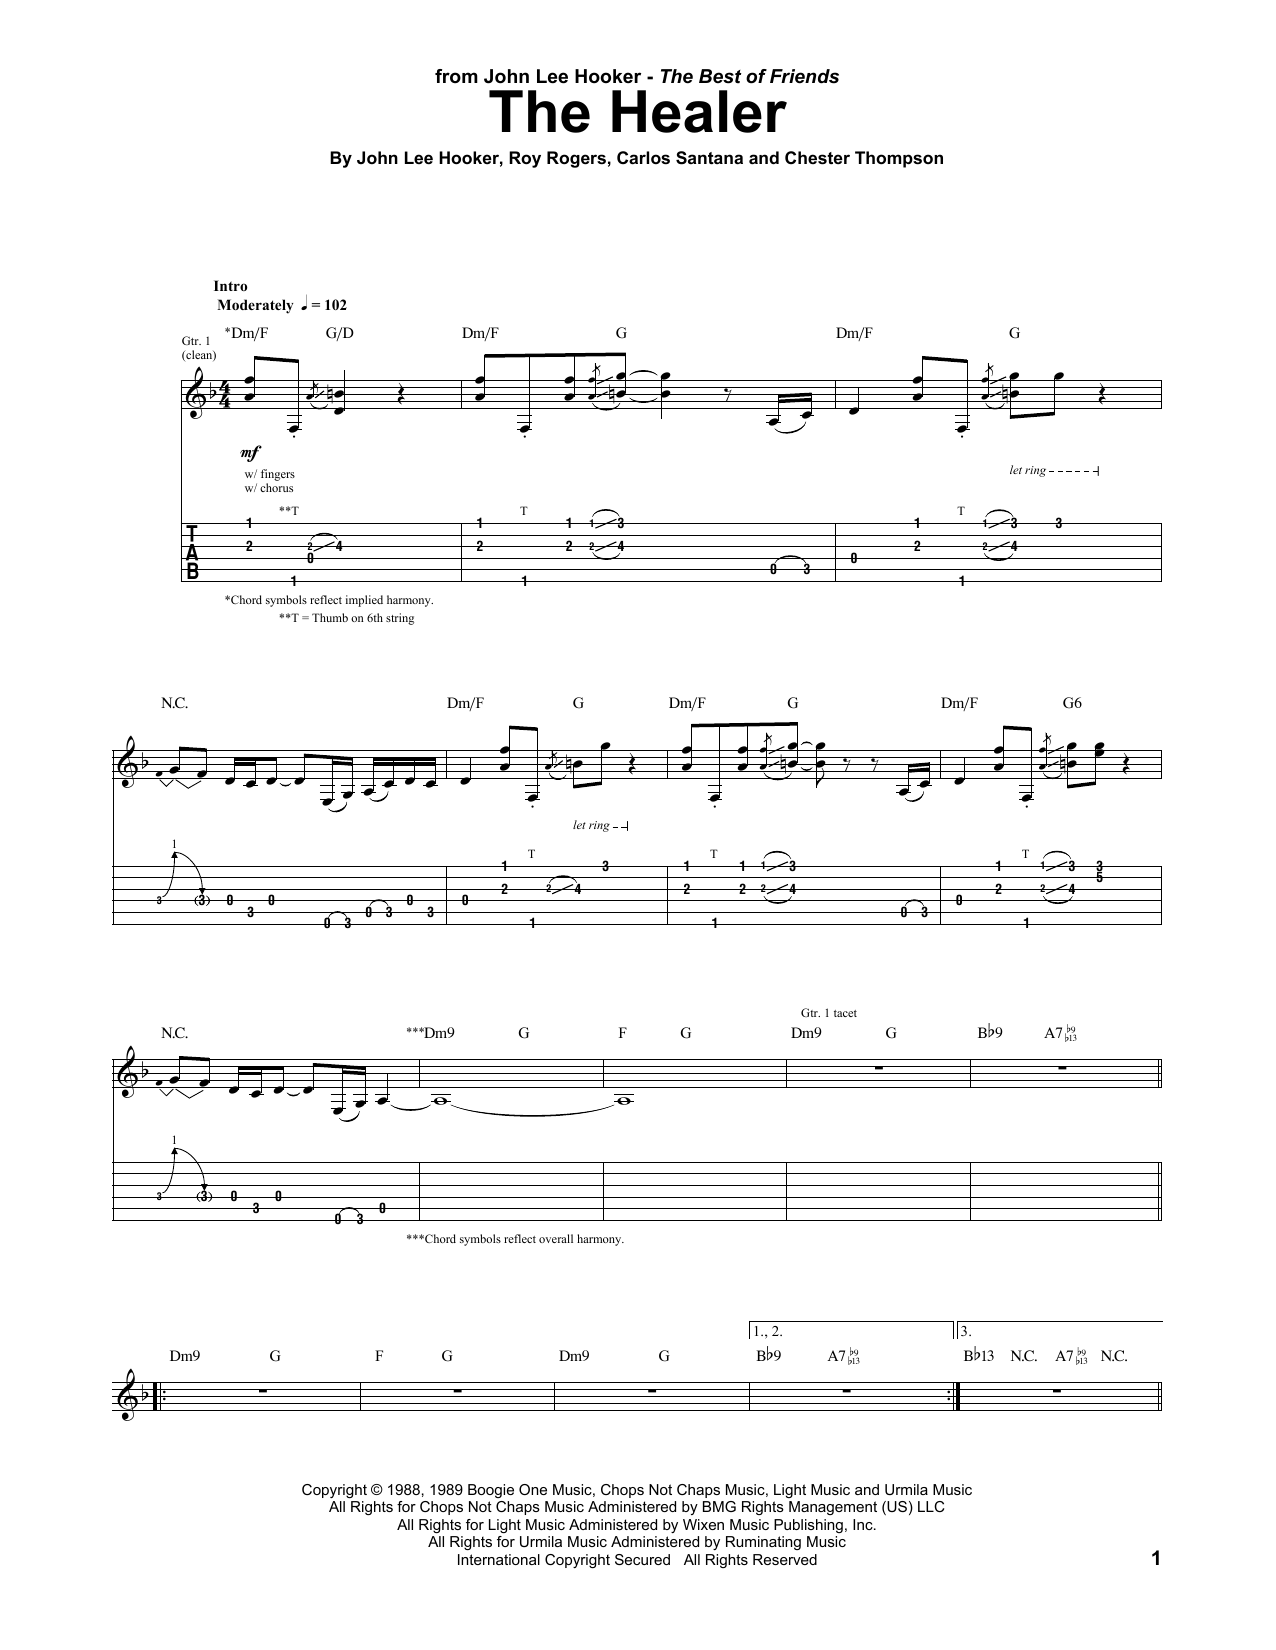 John Lee Hooker The Healer Sheet Music Notes & Chords for Guitar Tab - Download or Print PDF